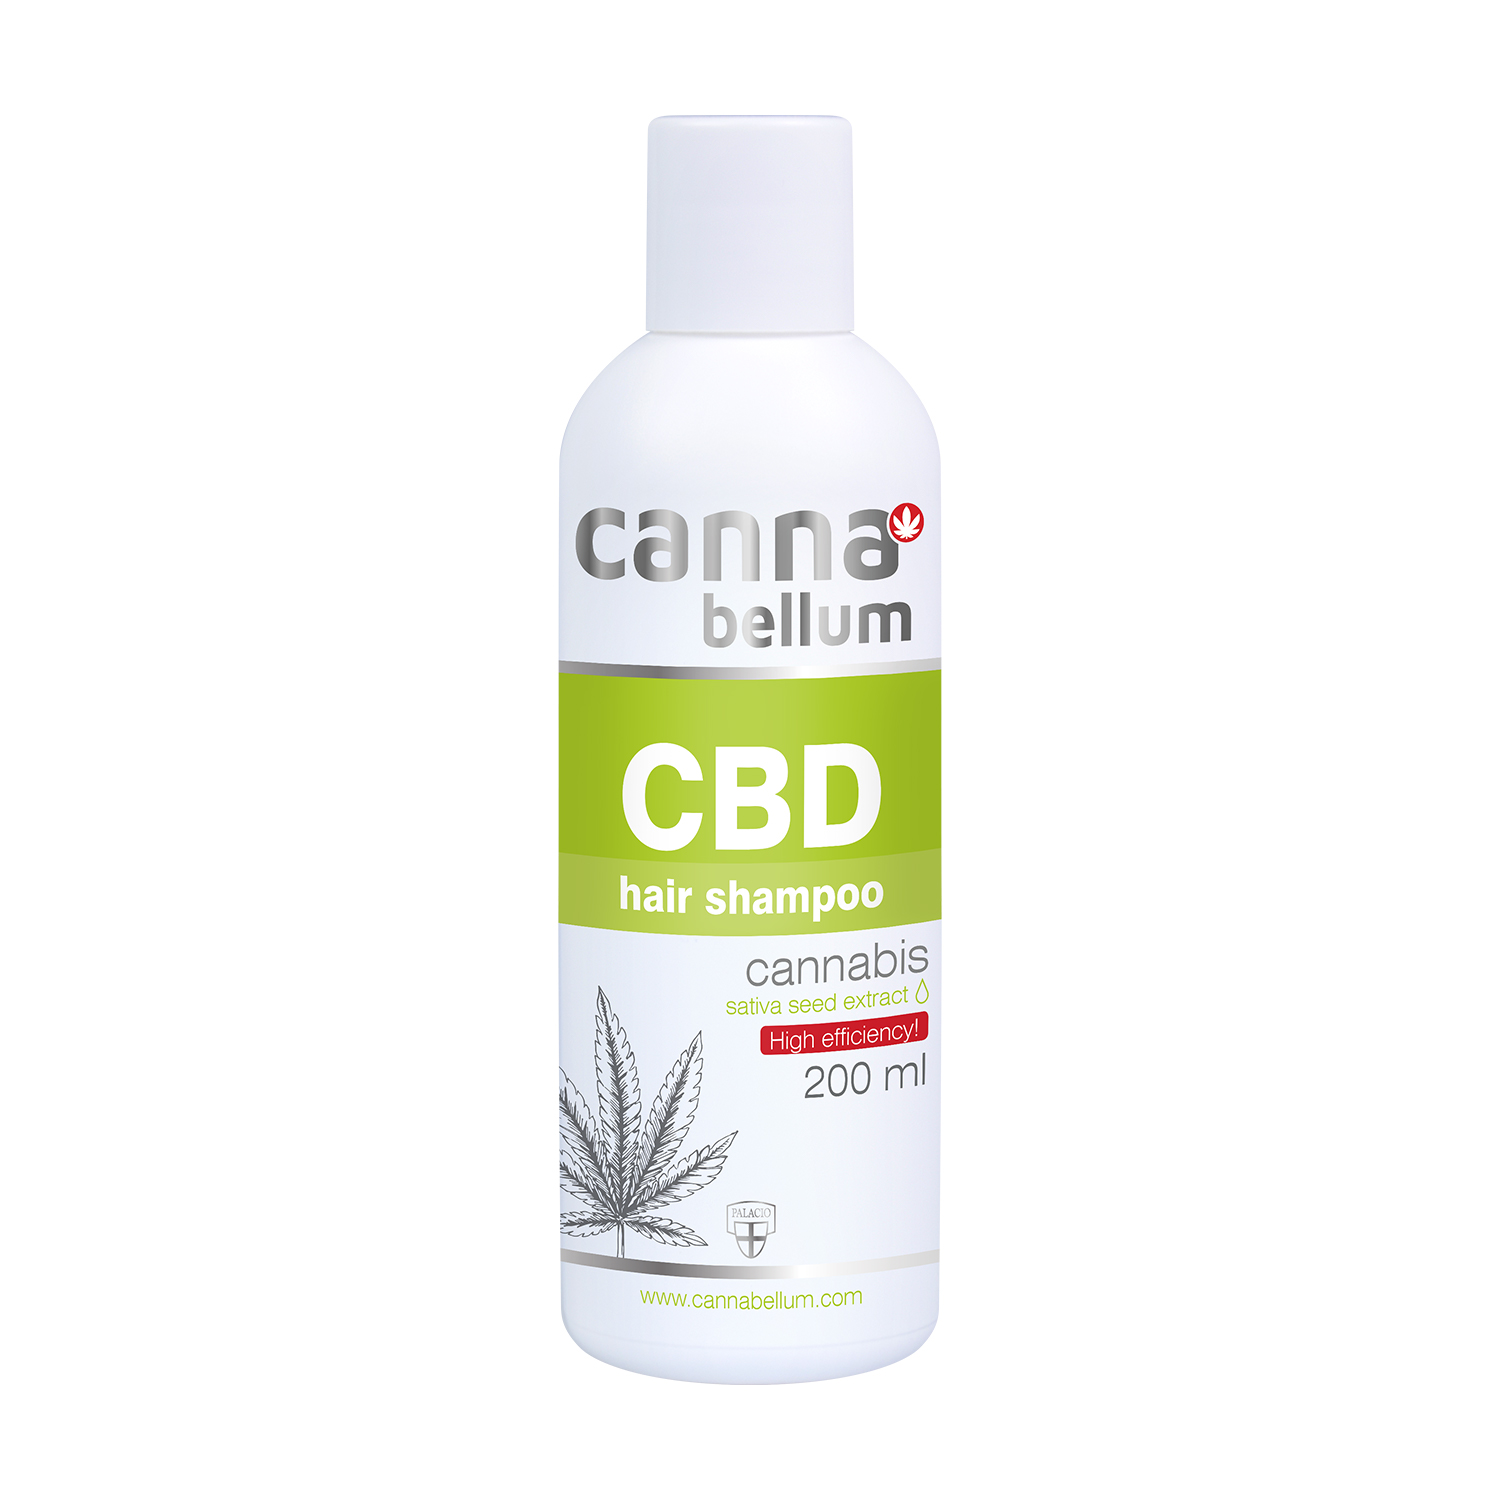 Cannabellum CBD hair shampoo 200ml P1251 WEB 102